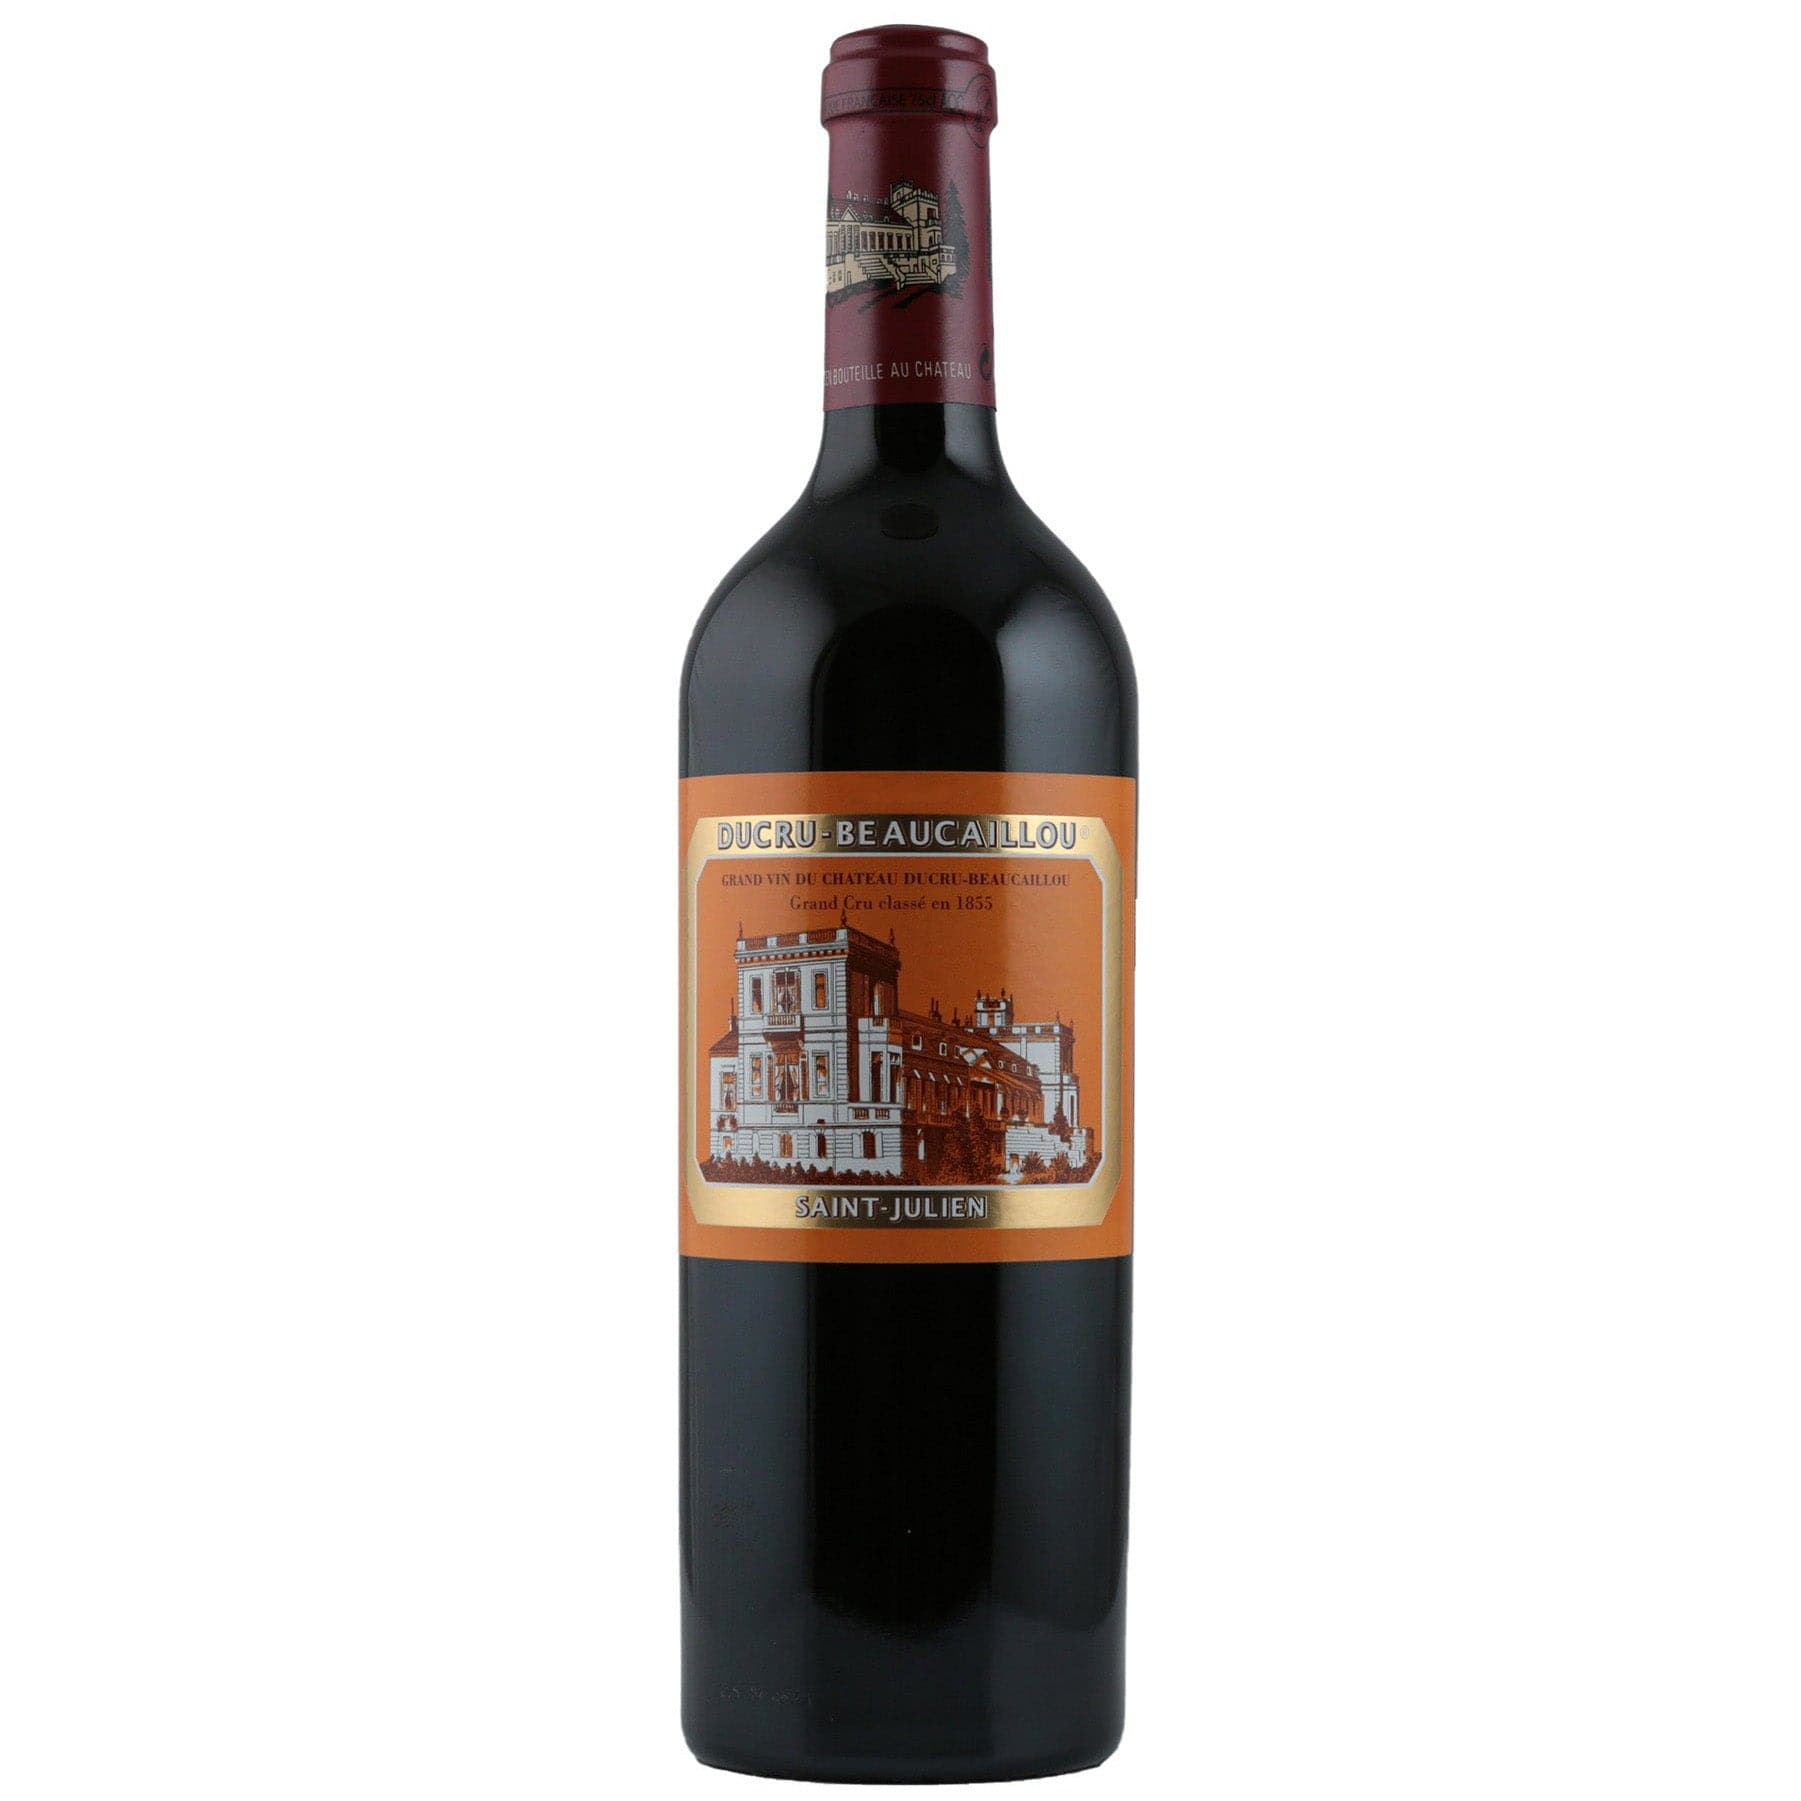 Single bottle of Red wine Ch. Ducru-Beaucaillou, 2nd Growth Grand Cru Classe, Saint Julien, 2010 85% Cabernet Sauvignon & 15% Merlot